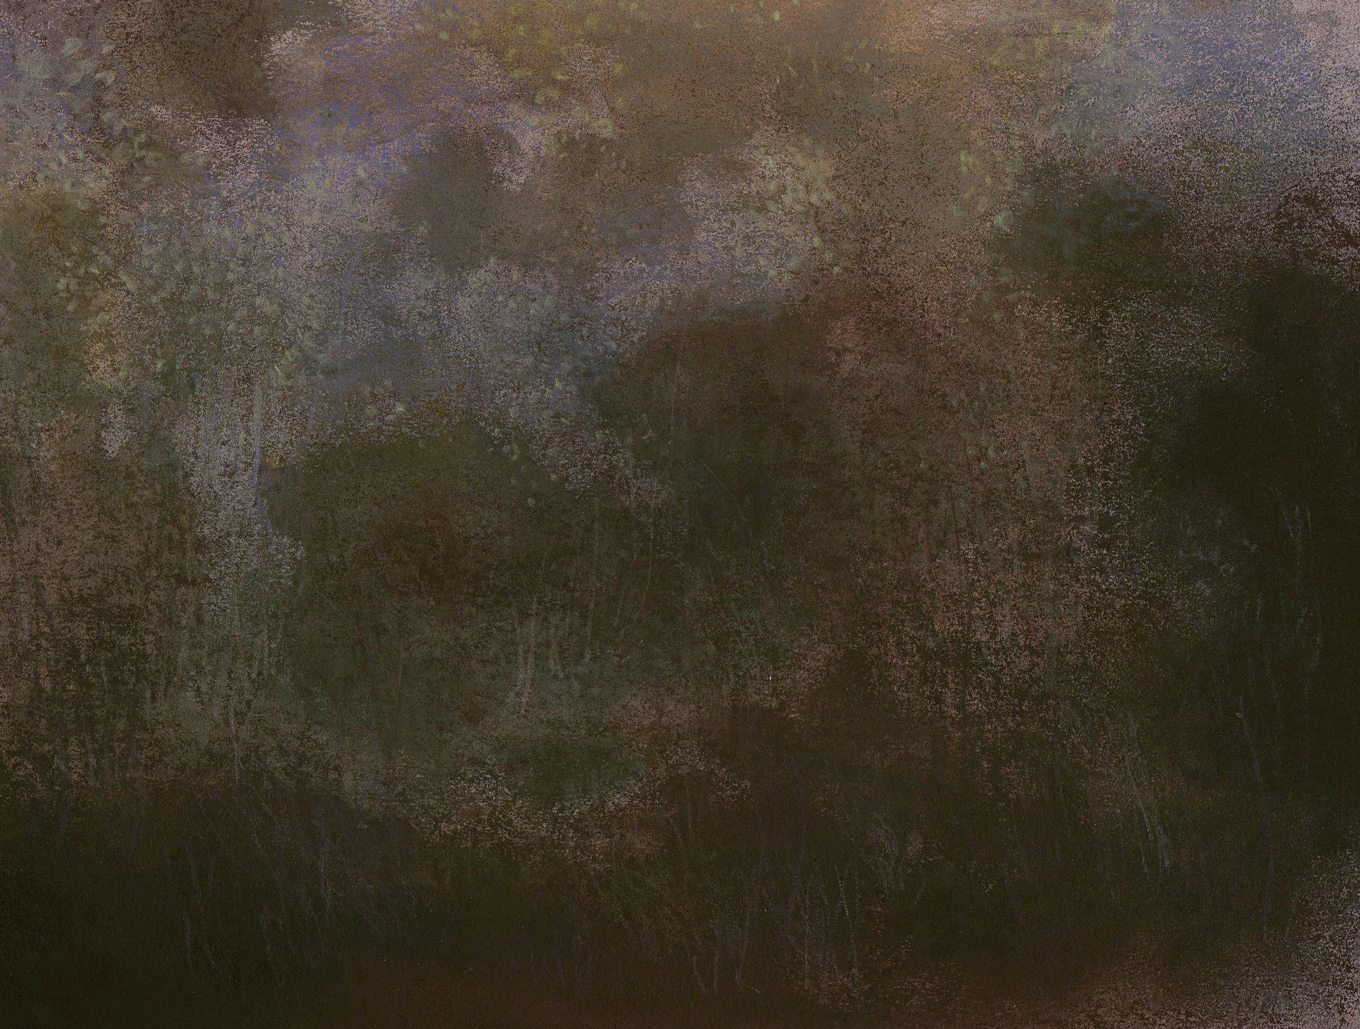 L1267 - Nicholas Herbert, British Artist, mixed media landscape painting of trees surrounding Mermaid's Pond, 2021